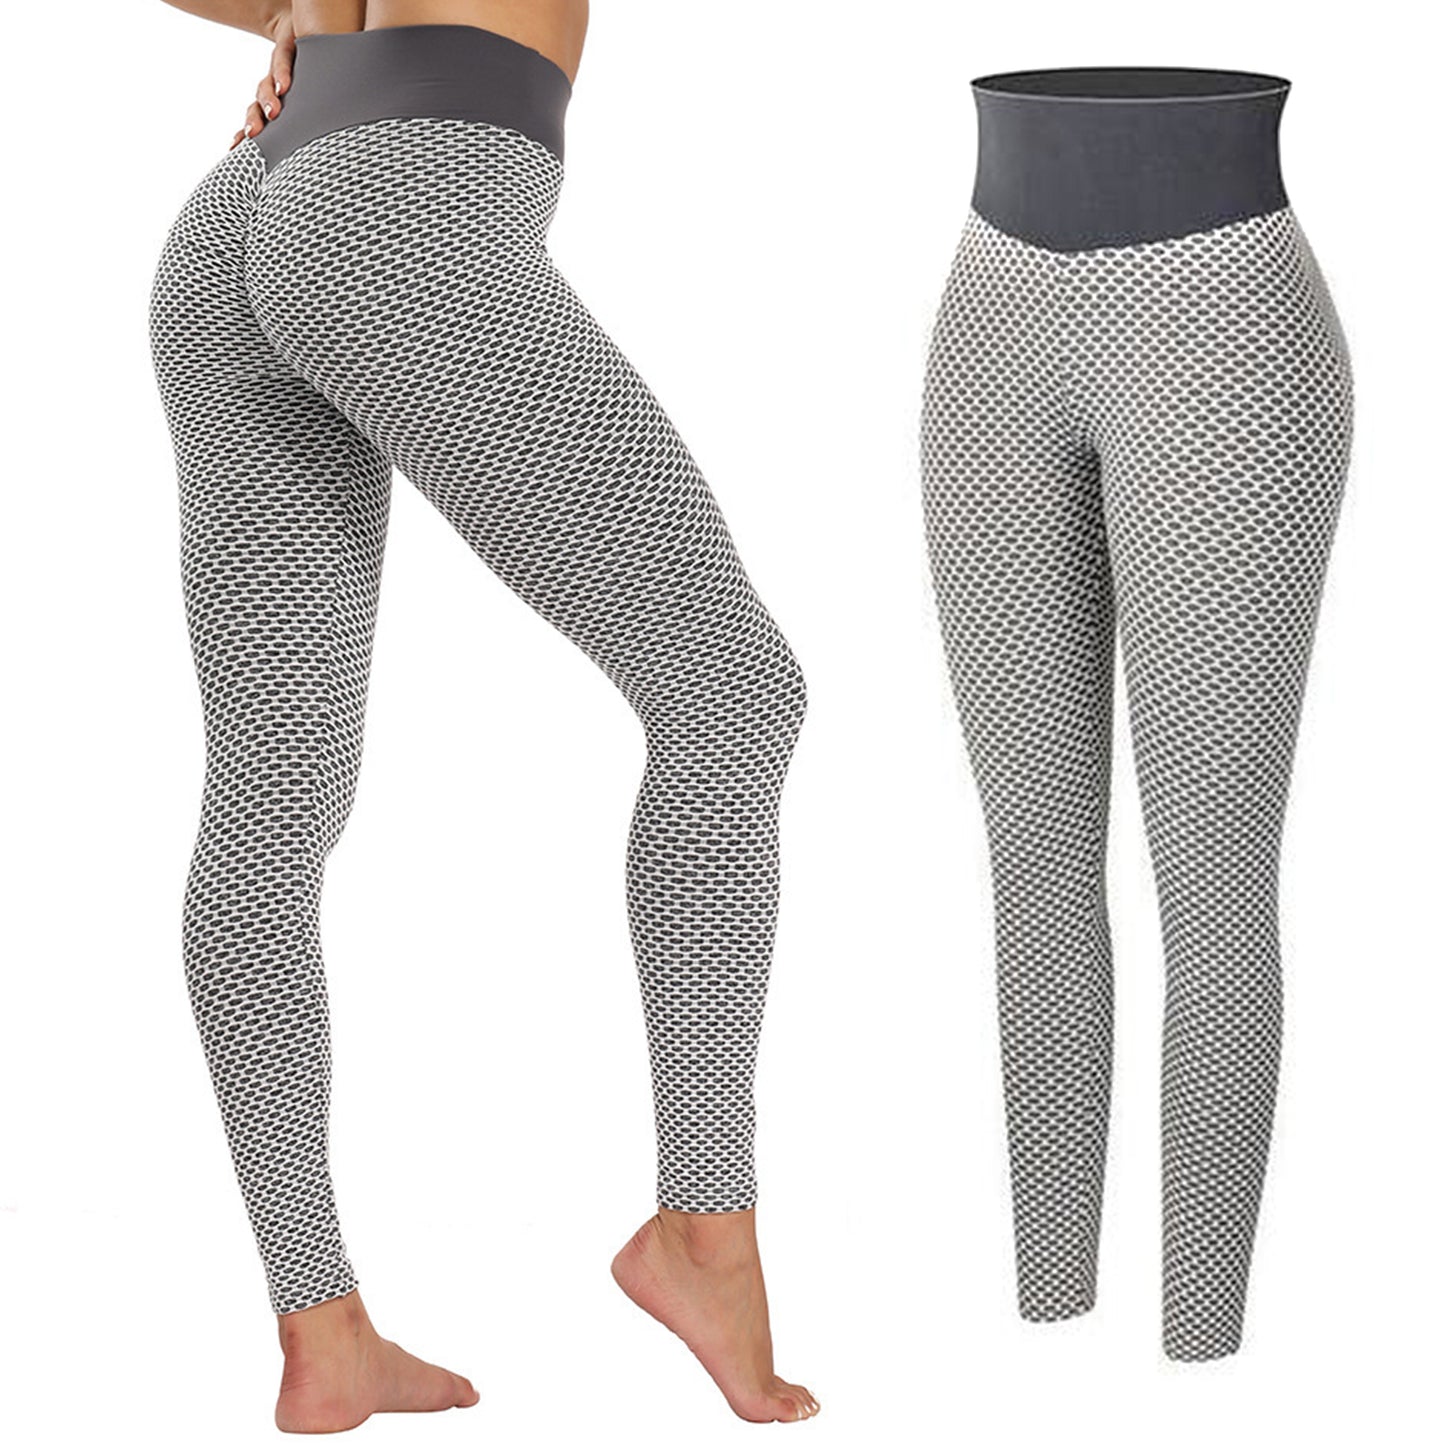 TIK Tok Leggings Women Butt Lifting Workout Tights Plus Size Sports High Waist Yoga Pants Light Grey - ladieskits - 5